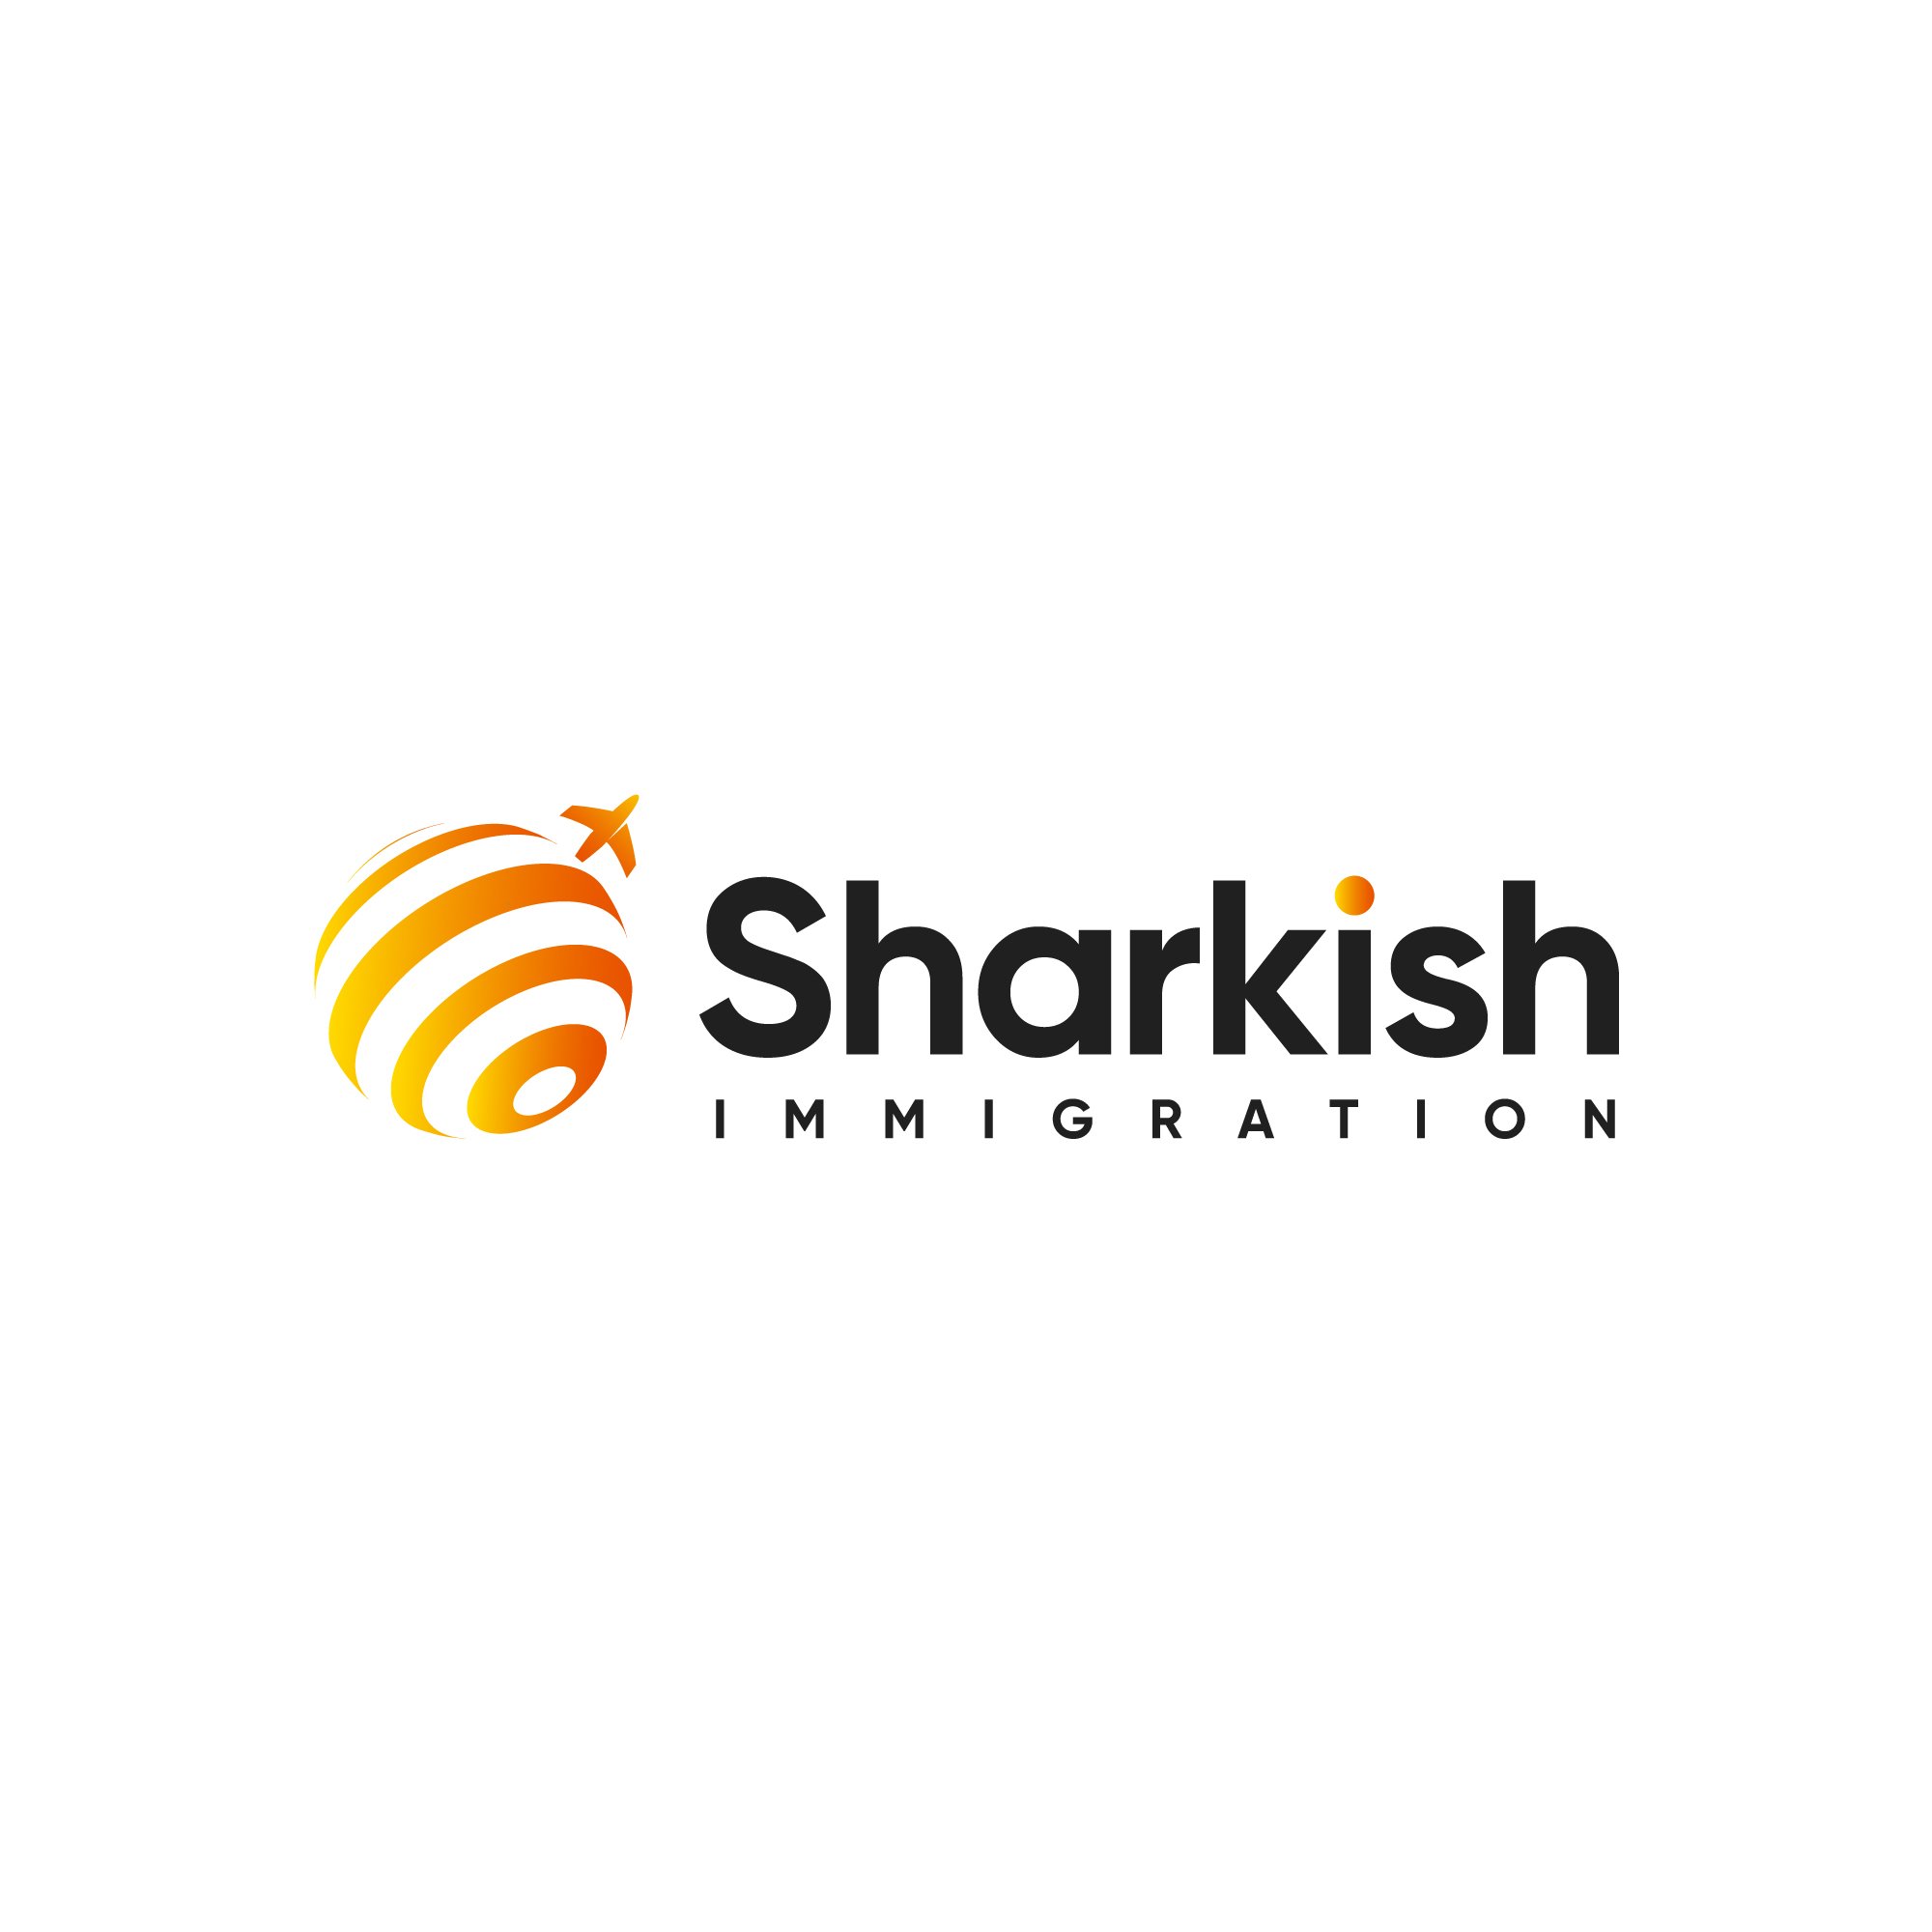 Sharkish Immigration